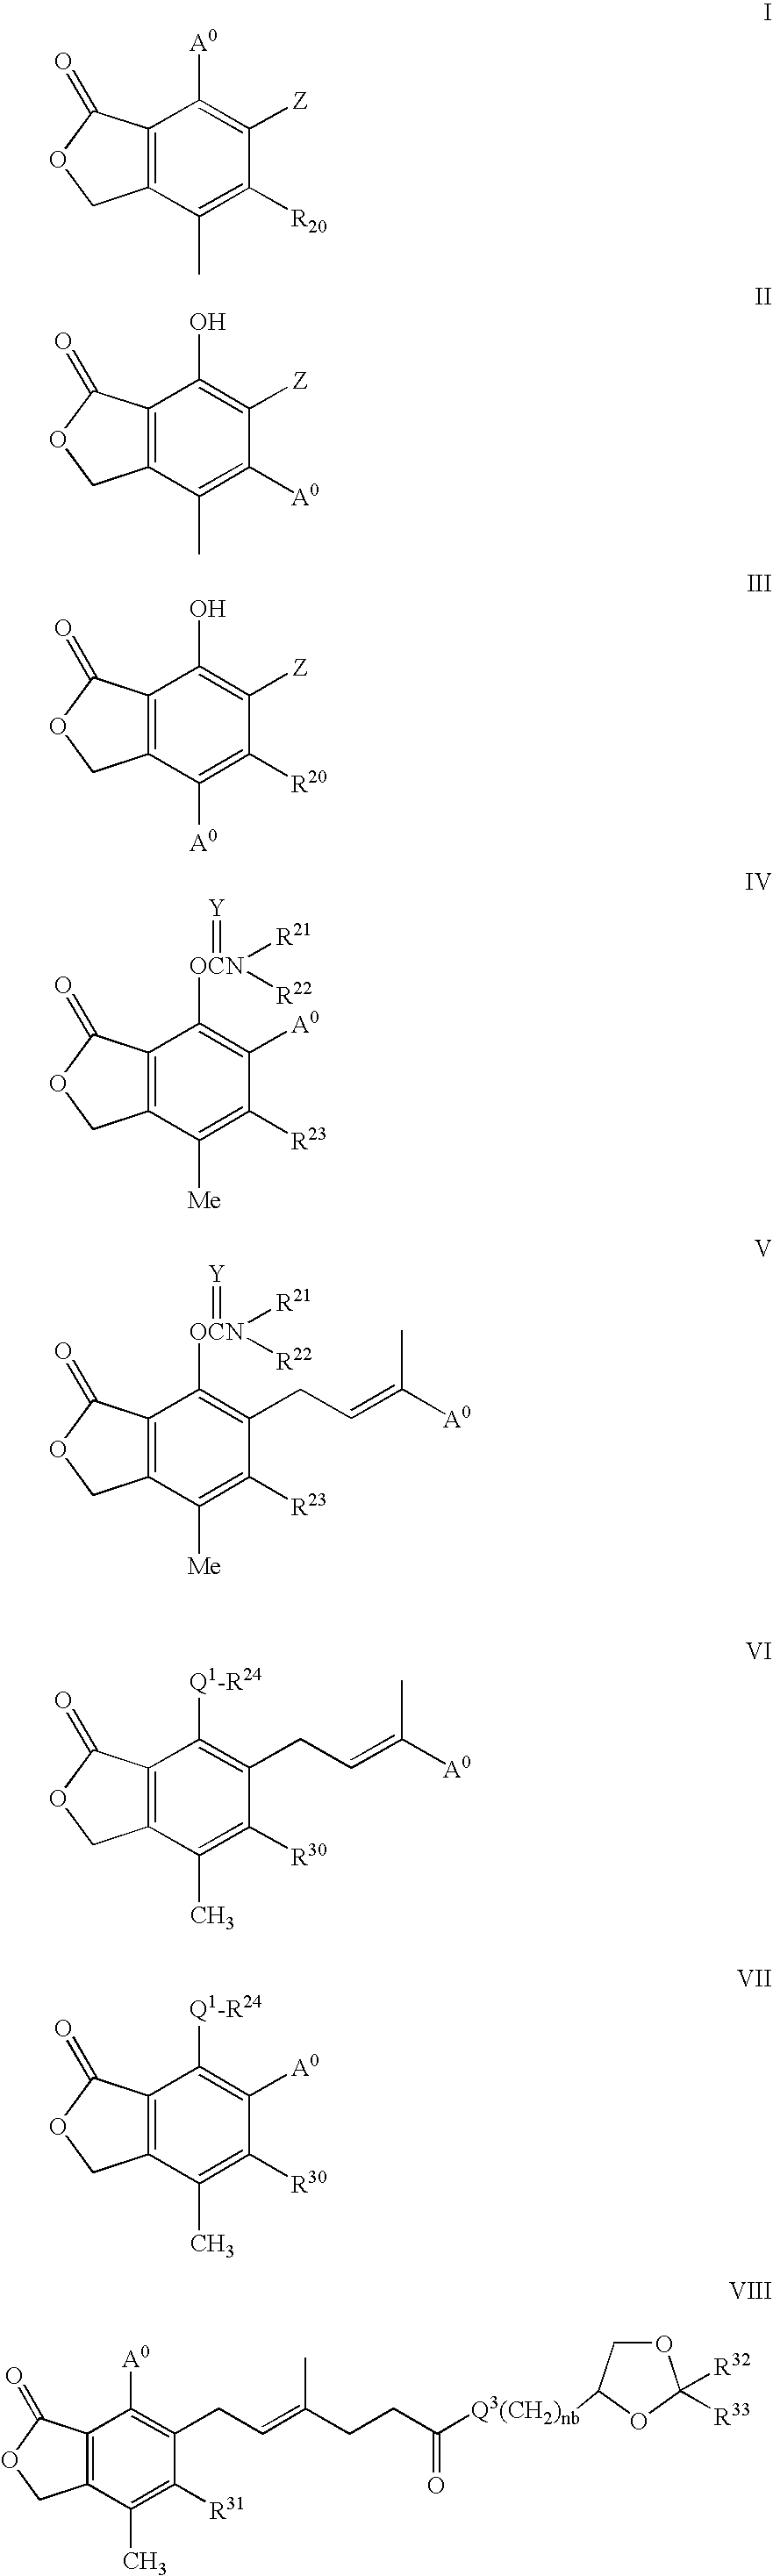 Phosphonate Derivatives of Mycophenolic Acid